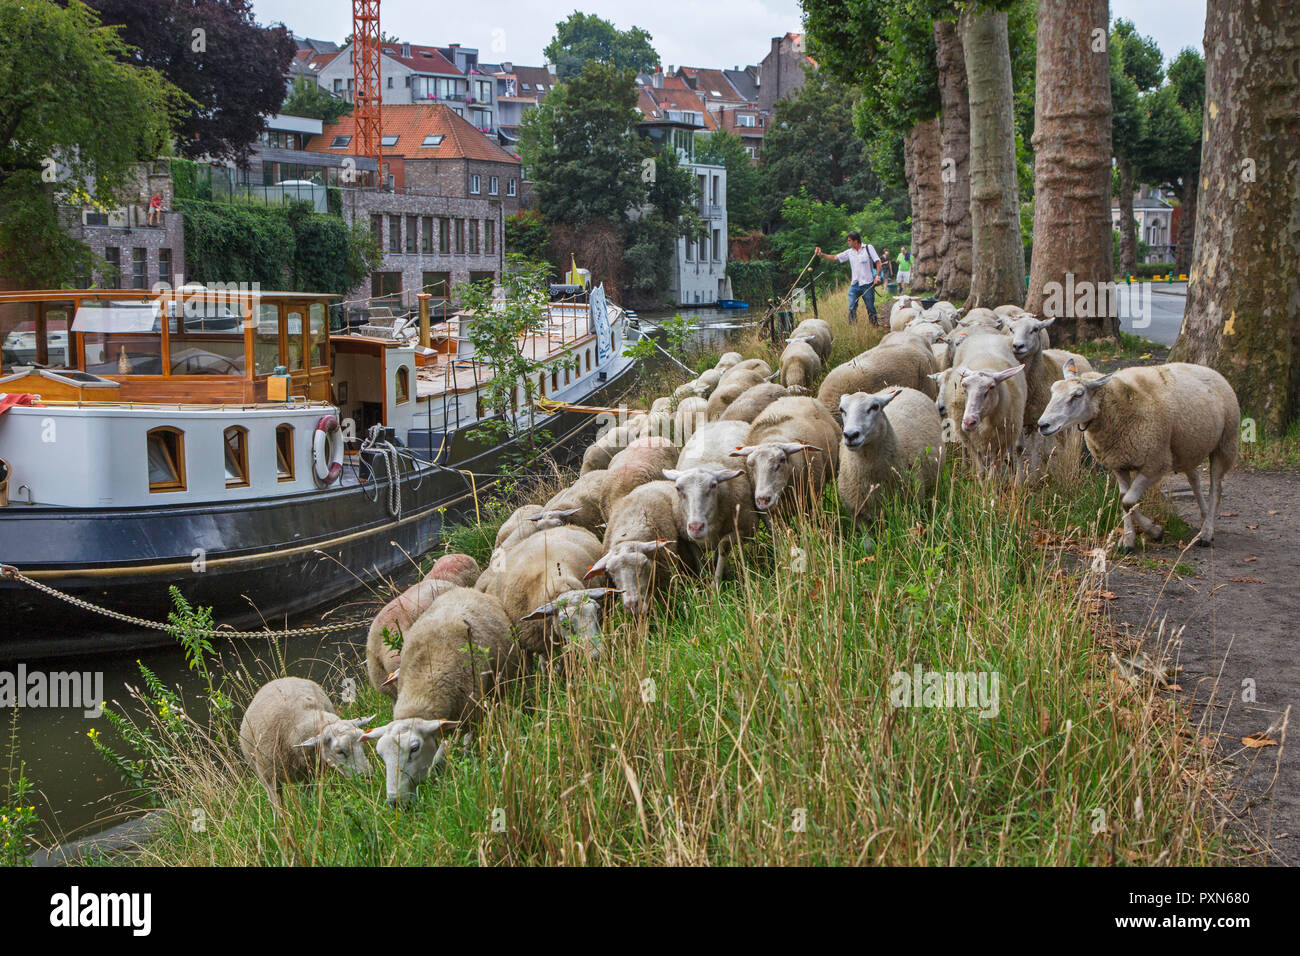 Shepherd herding Herde von Schafen entlang steiler Canal bank im Sommer in der Stadt Gent/Gent, Flandern, Belgien Stockfoto